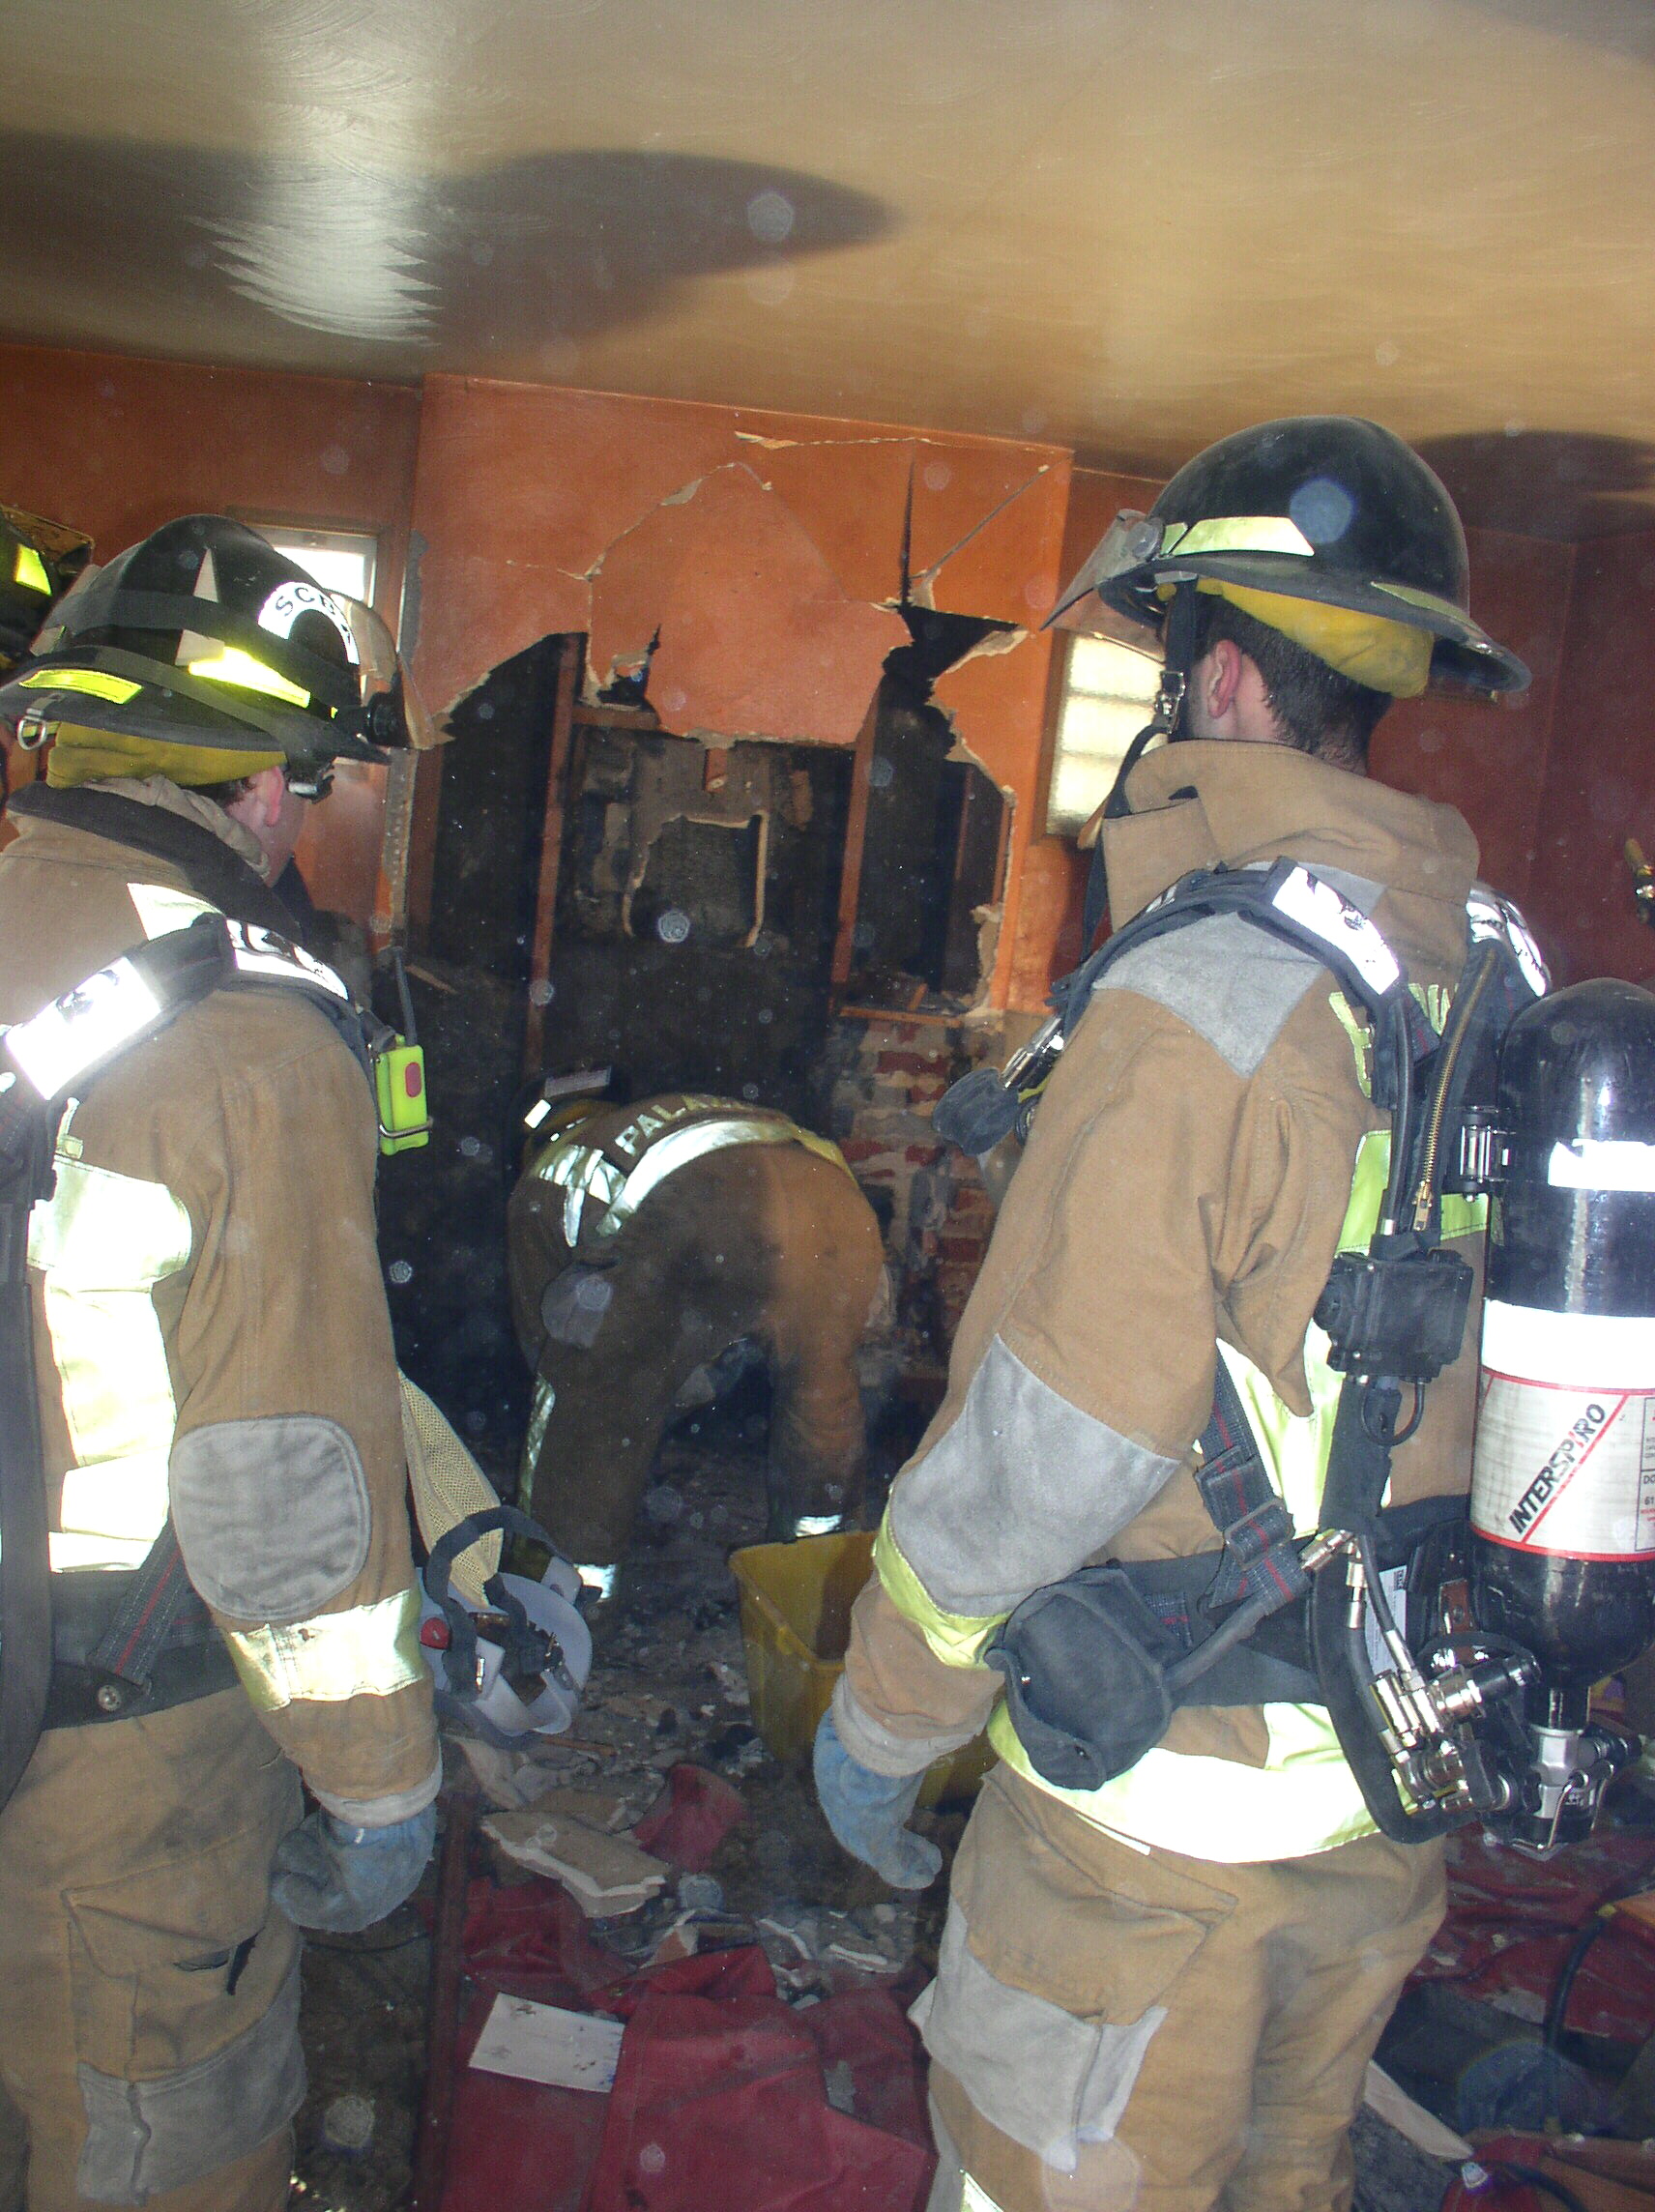 11-23-05  Response - Chimney Fire, 3106 Kensington Rd